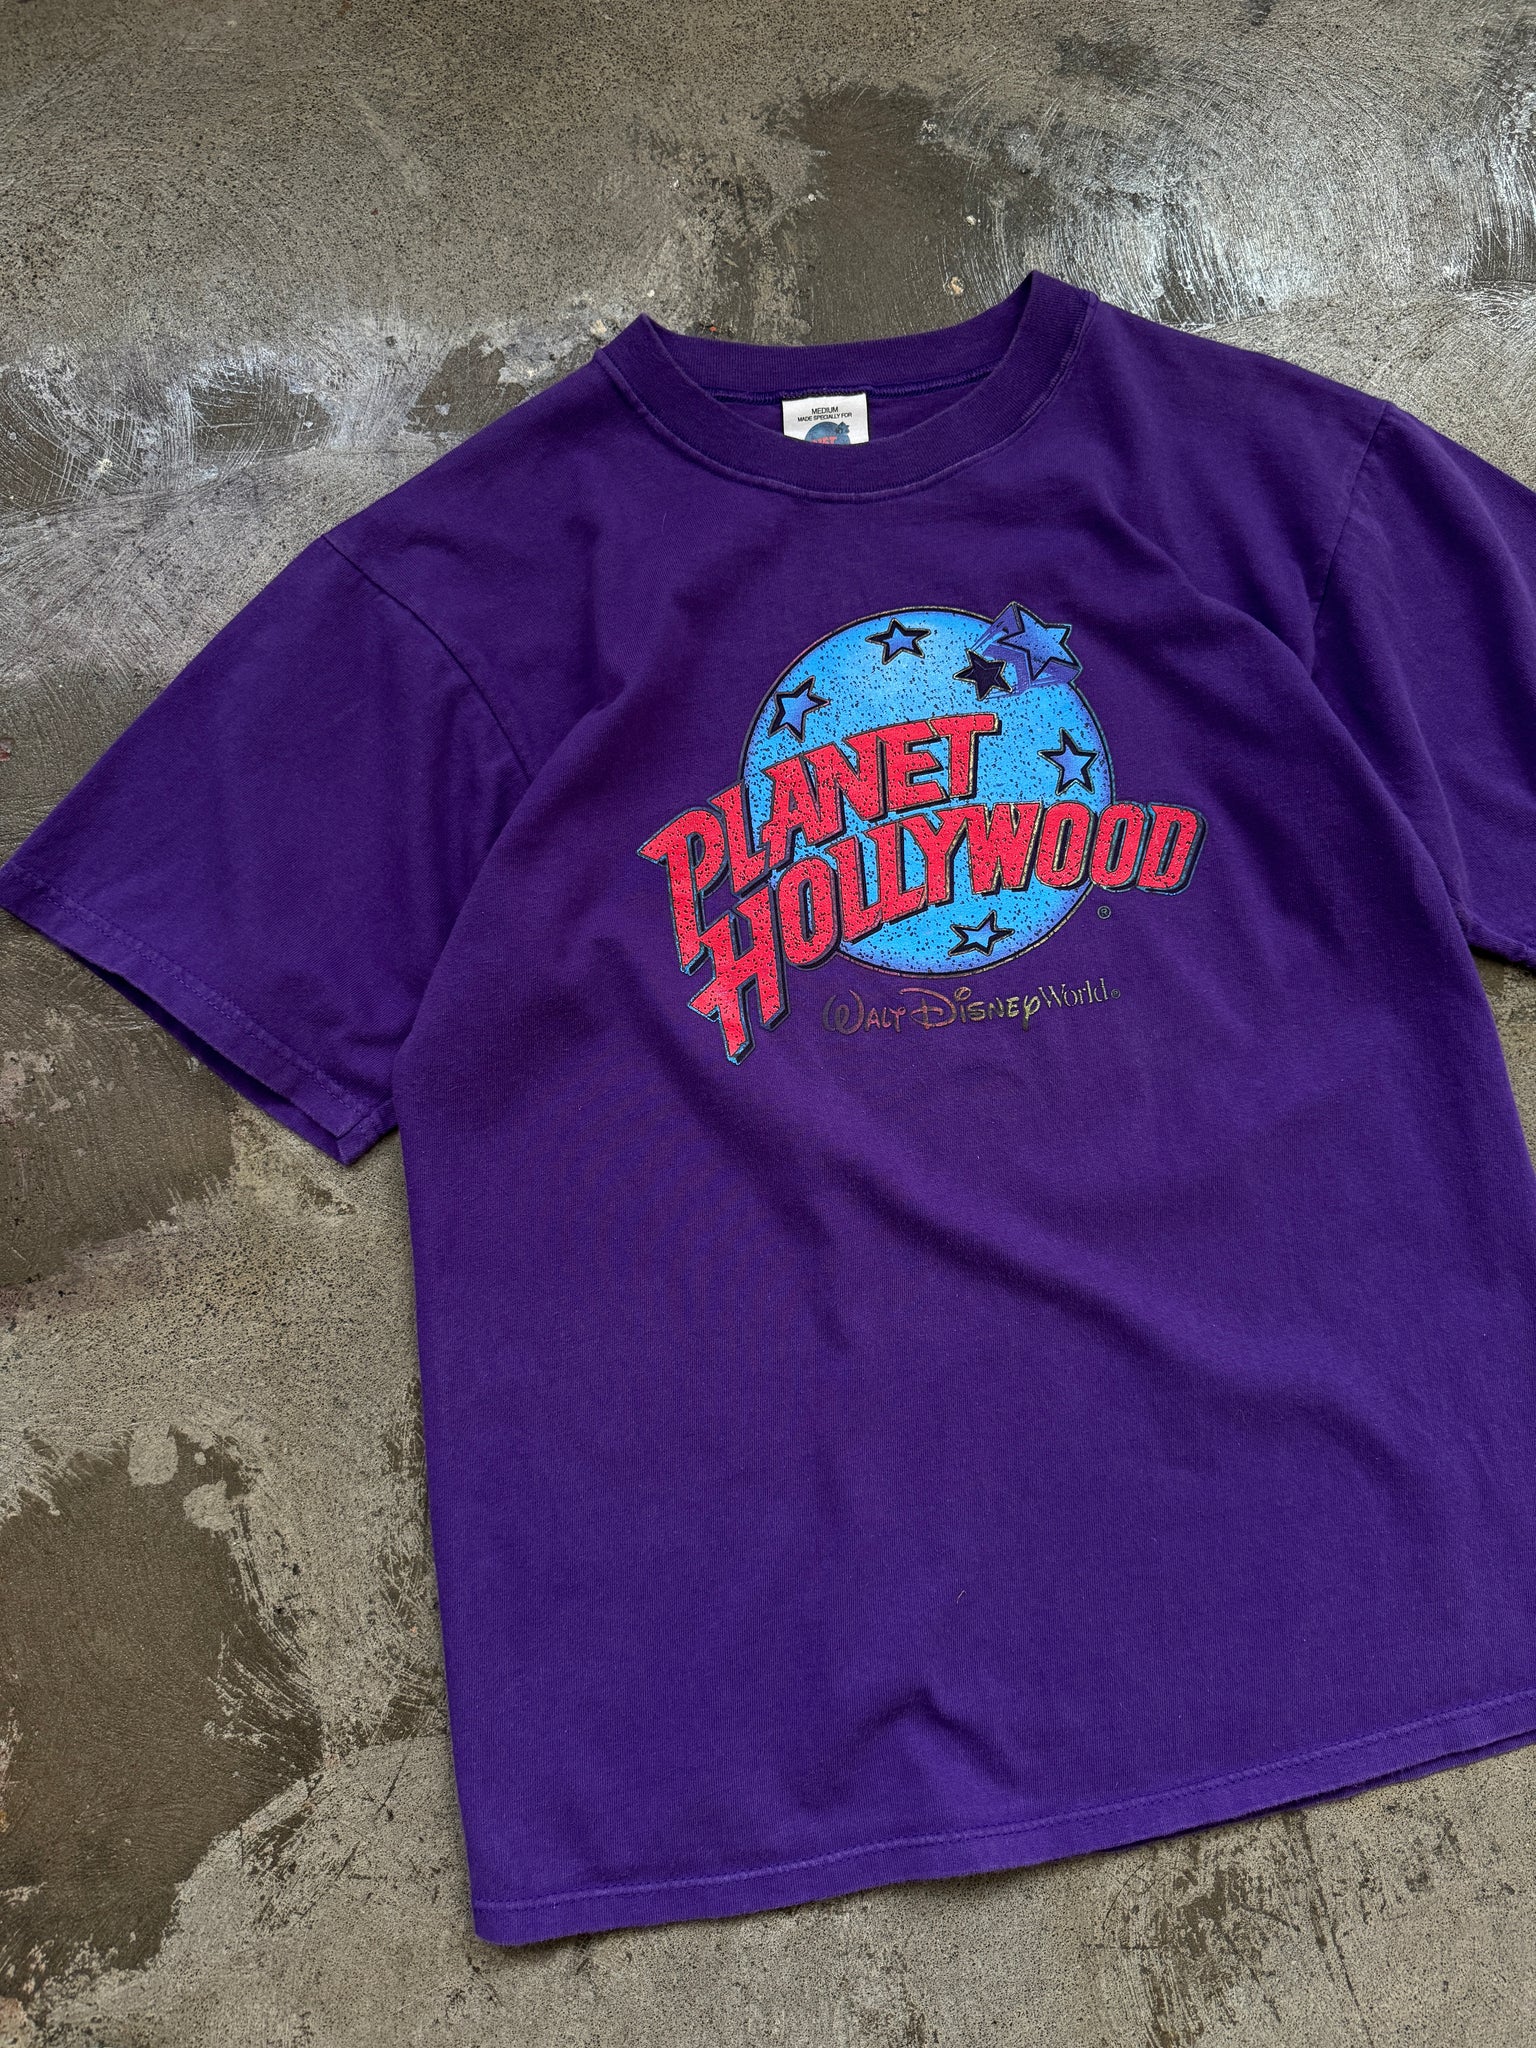 Vintage Planet Hollywood T'Shirt (M)